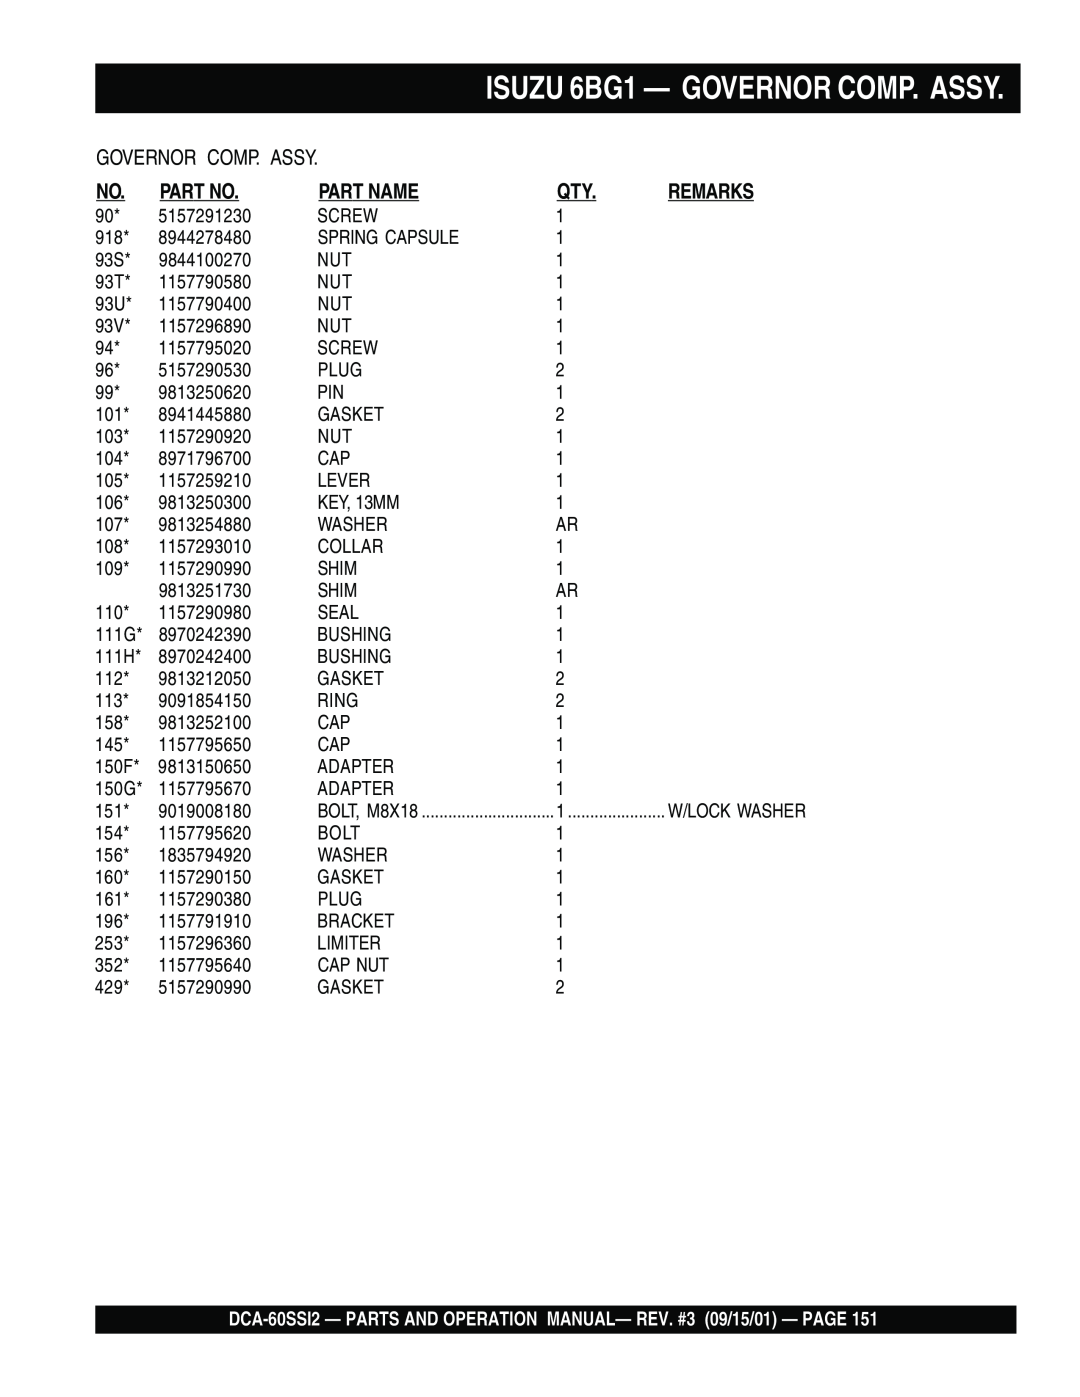 Multiquip DCA-60SS12 operation manual ISUZU 6BG1 — GOVERNOR COMP. ASSY, Part No, Part Name, Remarks, 5157291230 